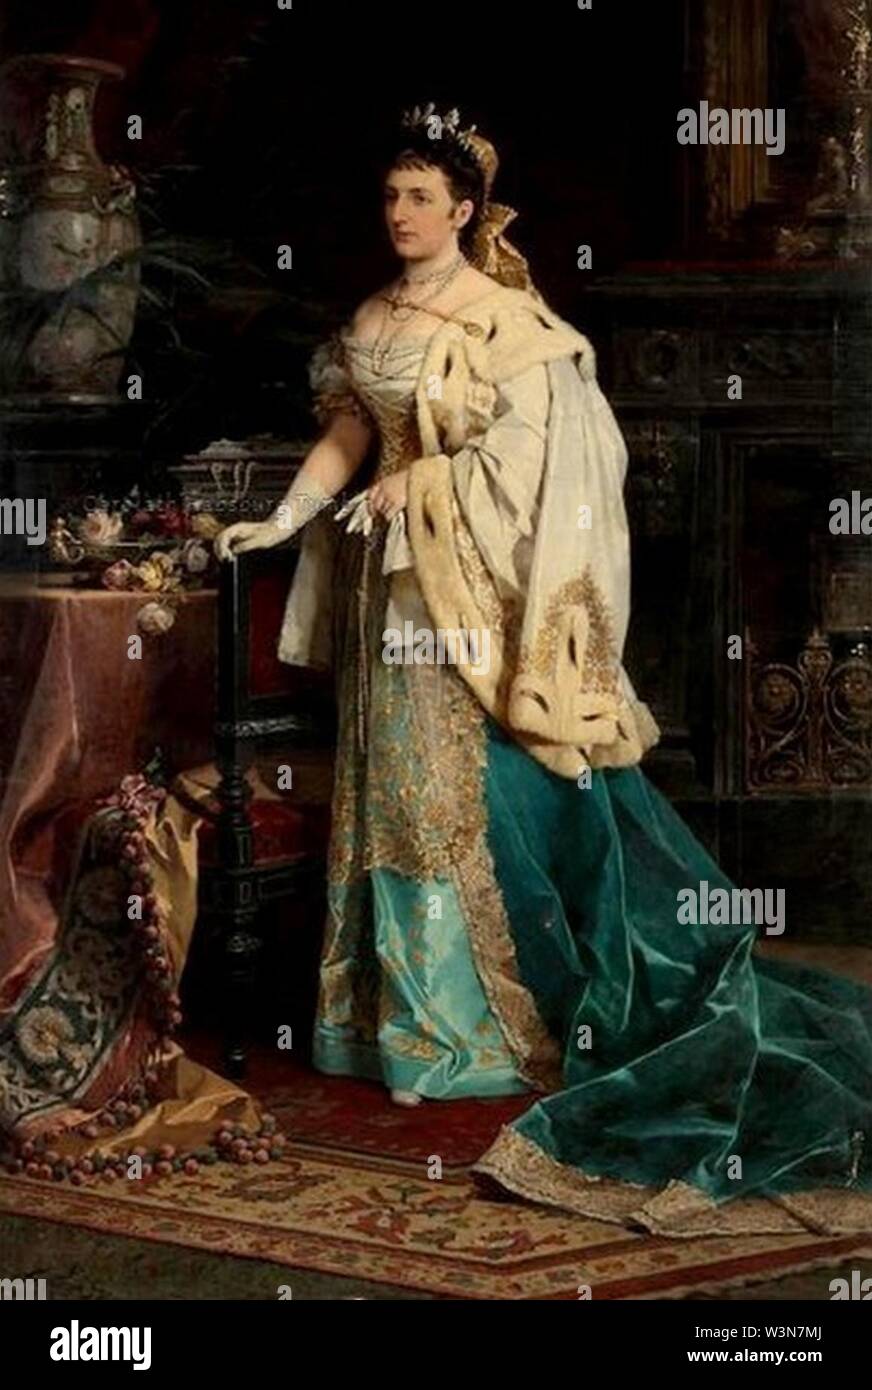 Clotilde - Countess Palatine of Hungary. Stock Photo